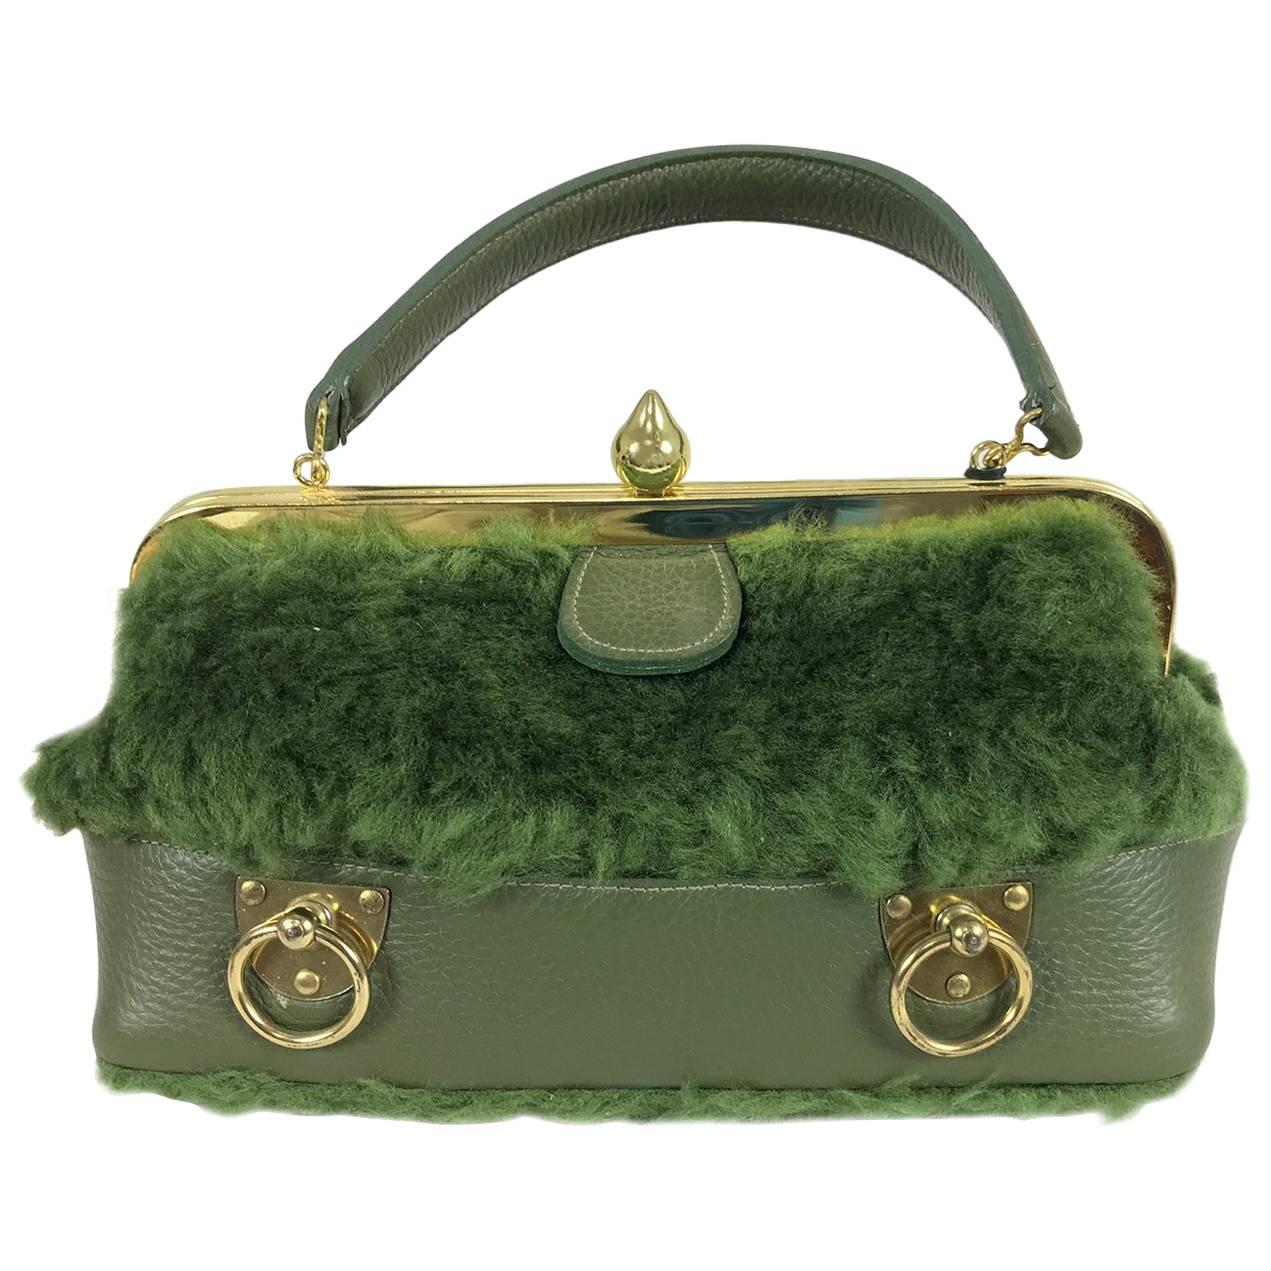 Roger Van S avocado green leather and faux fur handbag gold hardware 1960s NWT